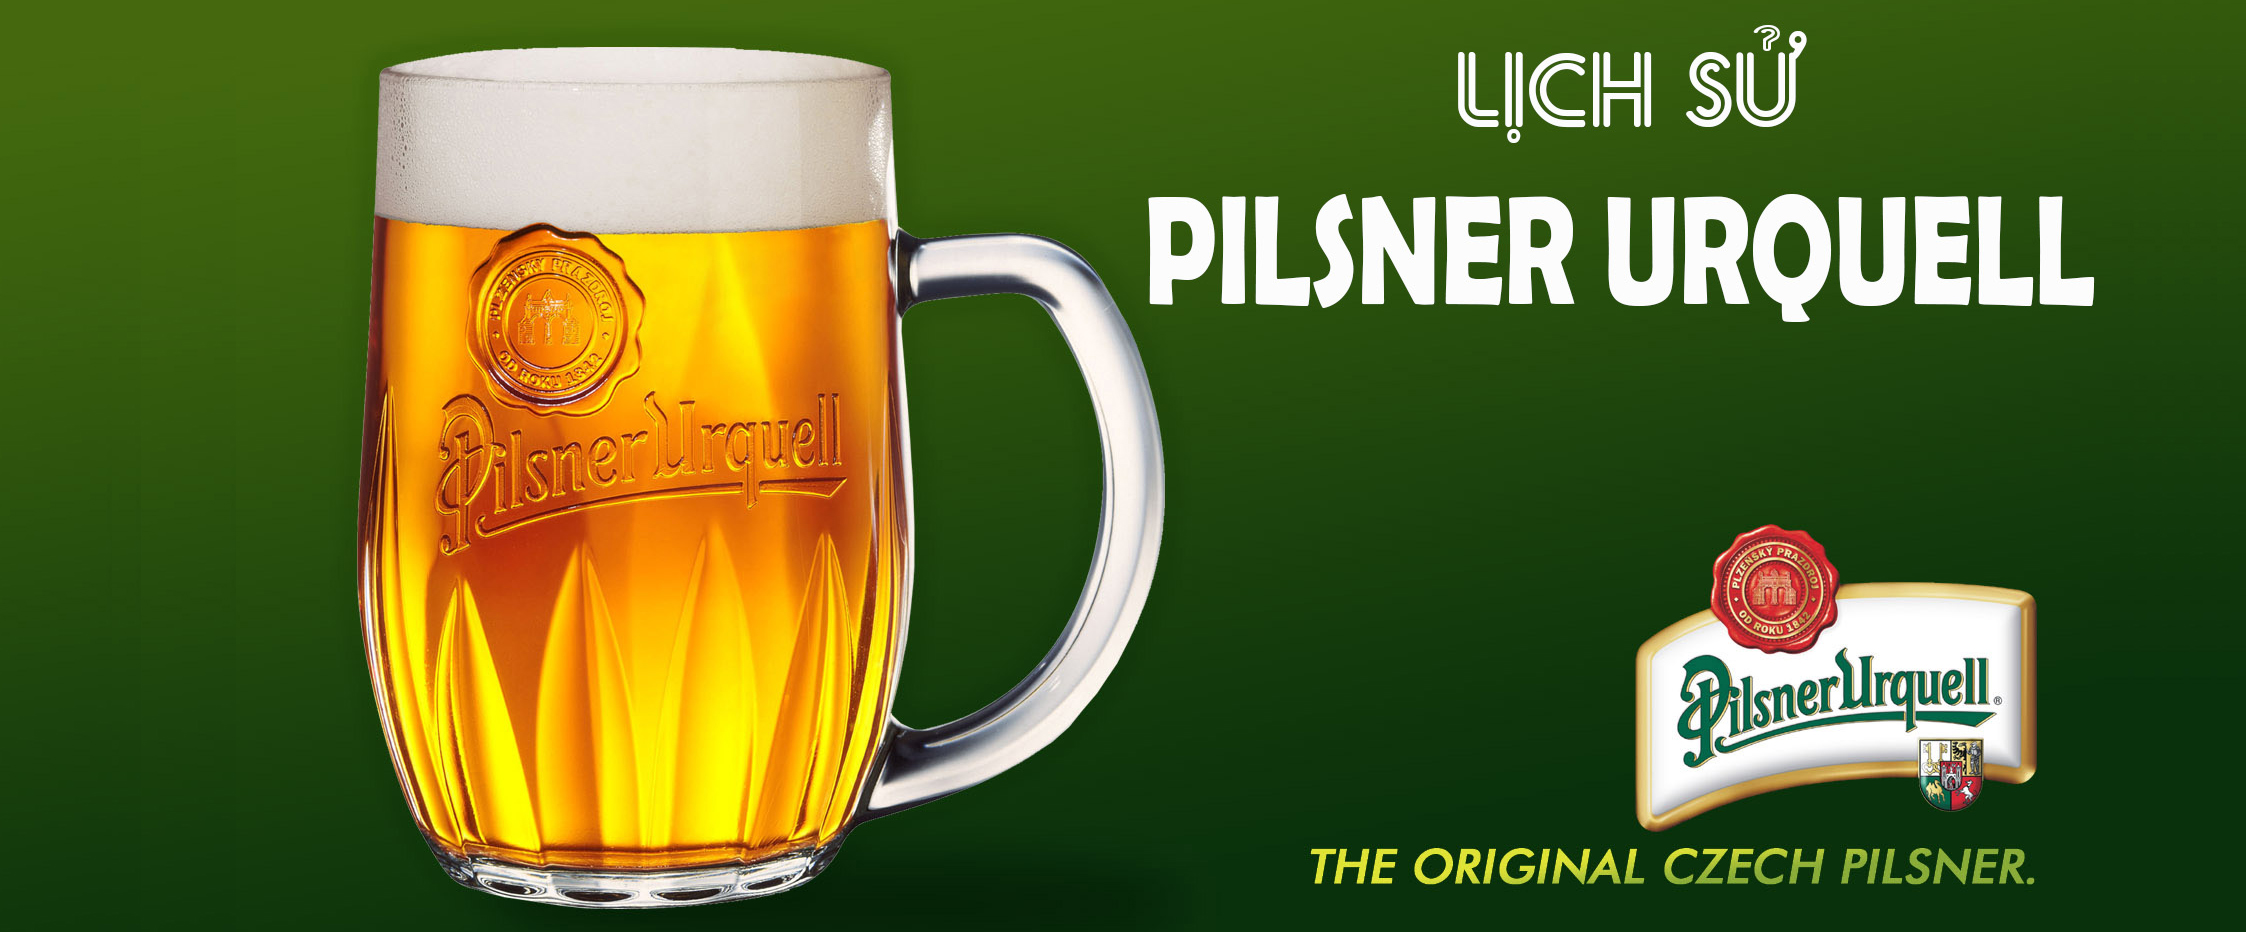 Lịch sử về bia Pilsner Urquell